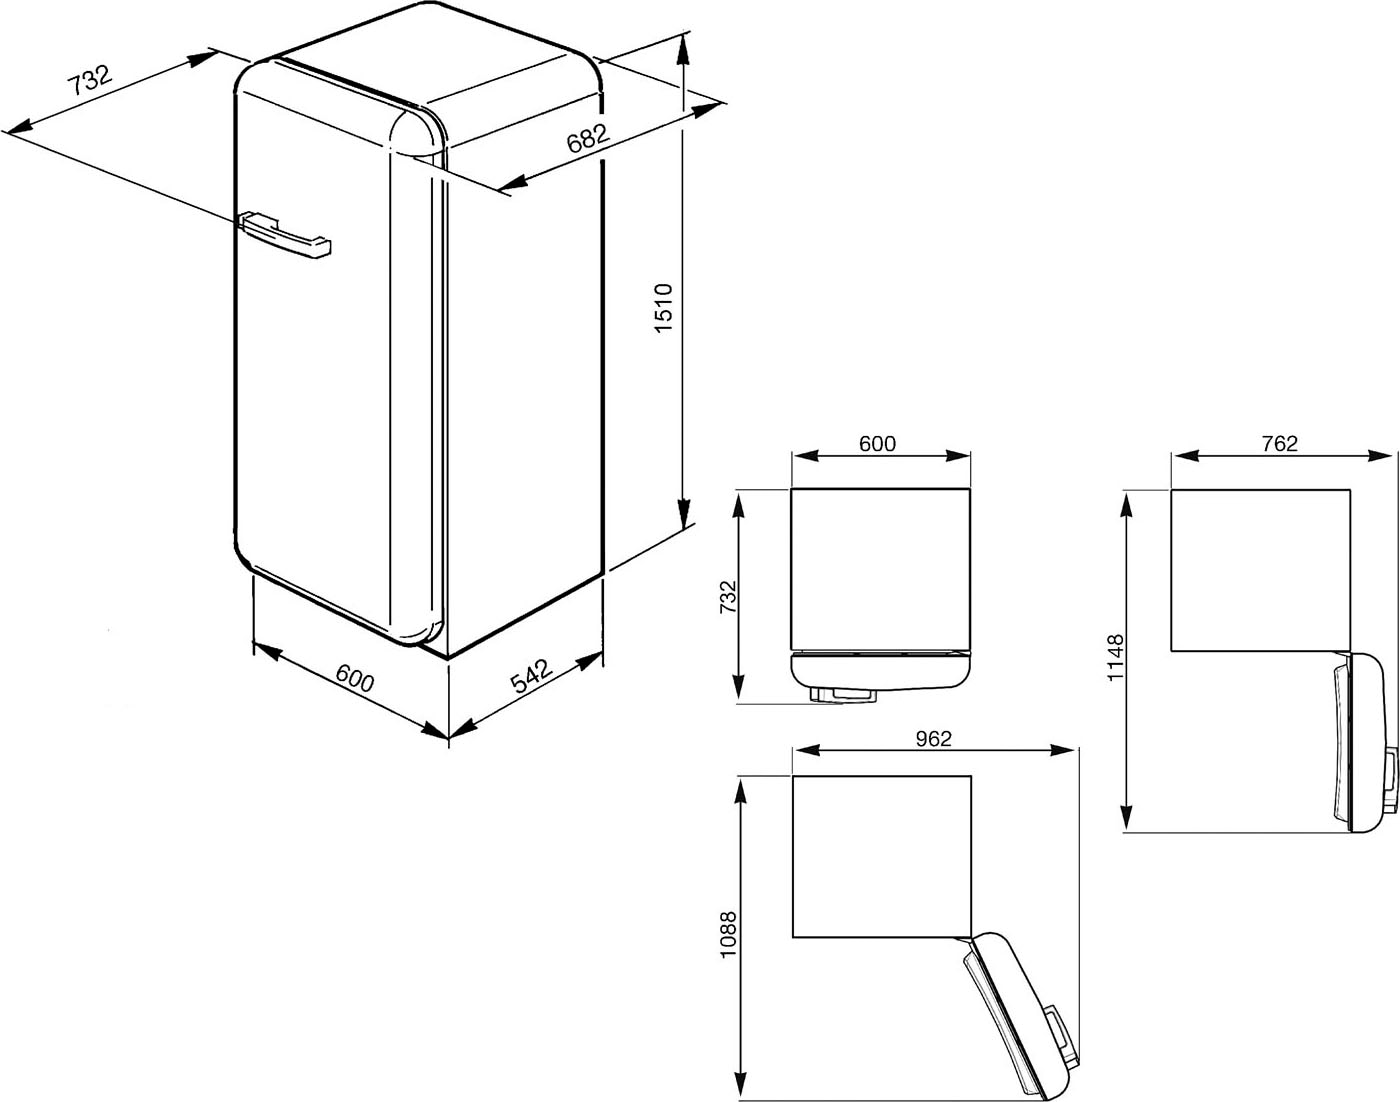 Smeg Kühlschrank »FAB28_5«, FAB28RDTP5, 150 cm hoch, 60 cm breit